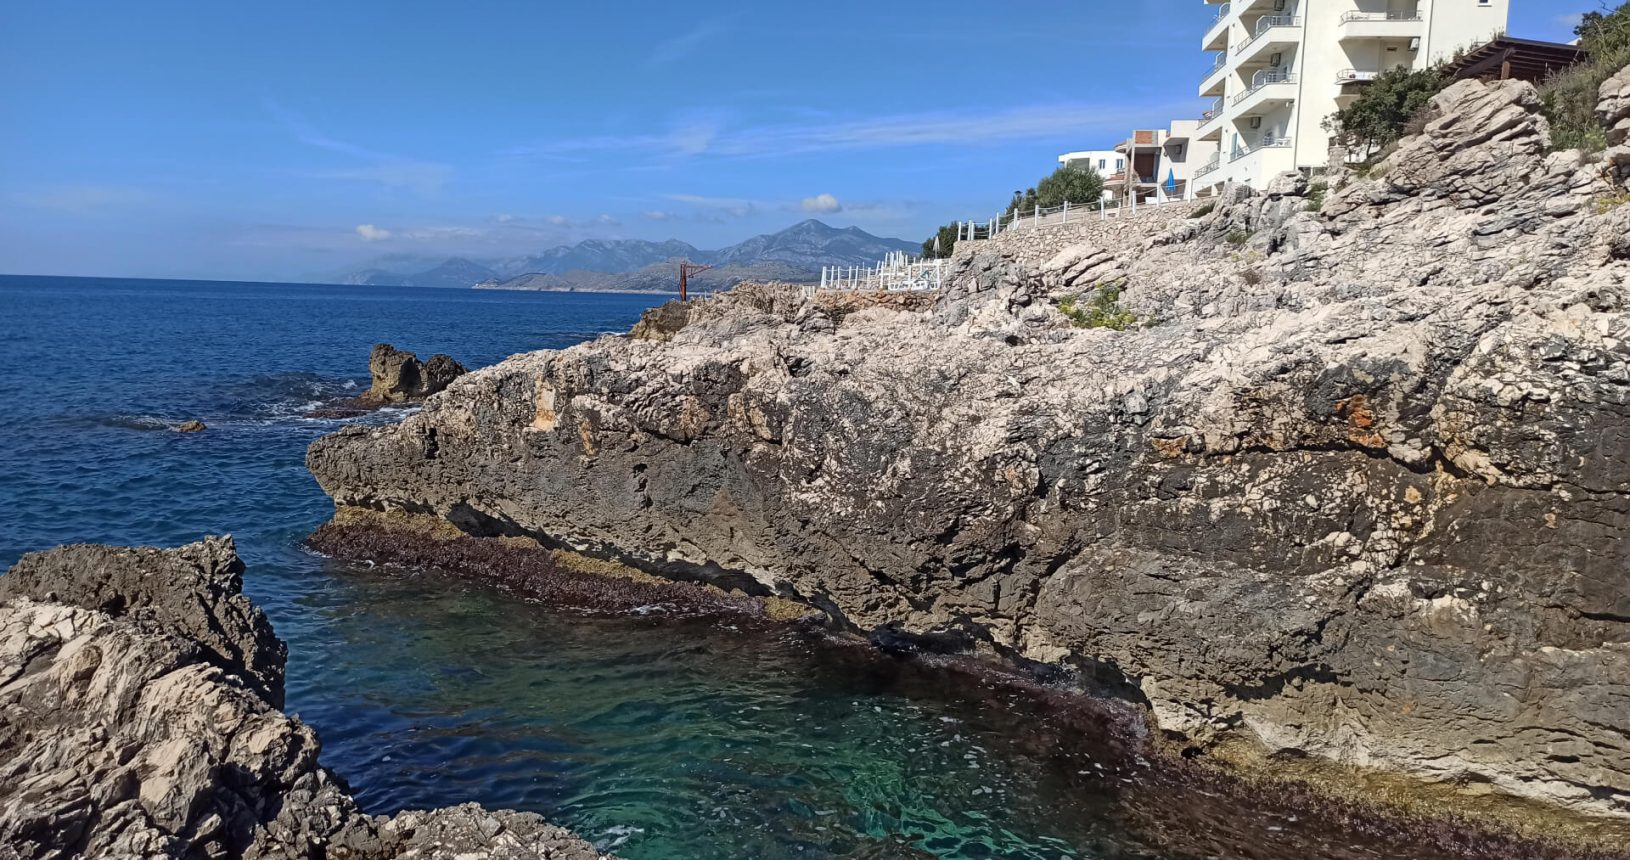 Hladna Uvala and its beautiful turquoise coastline